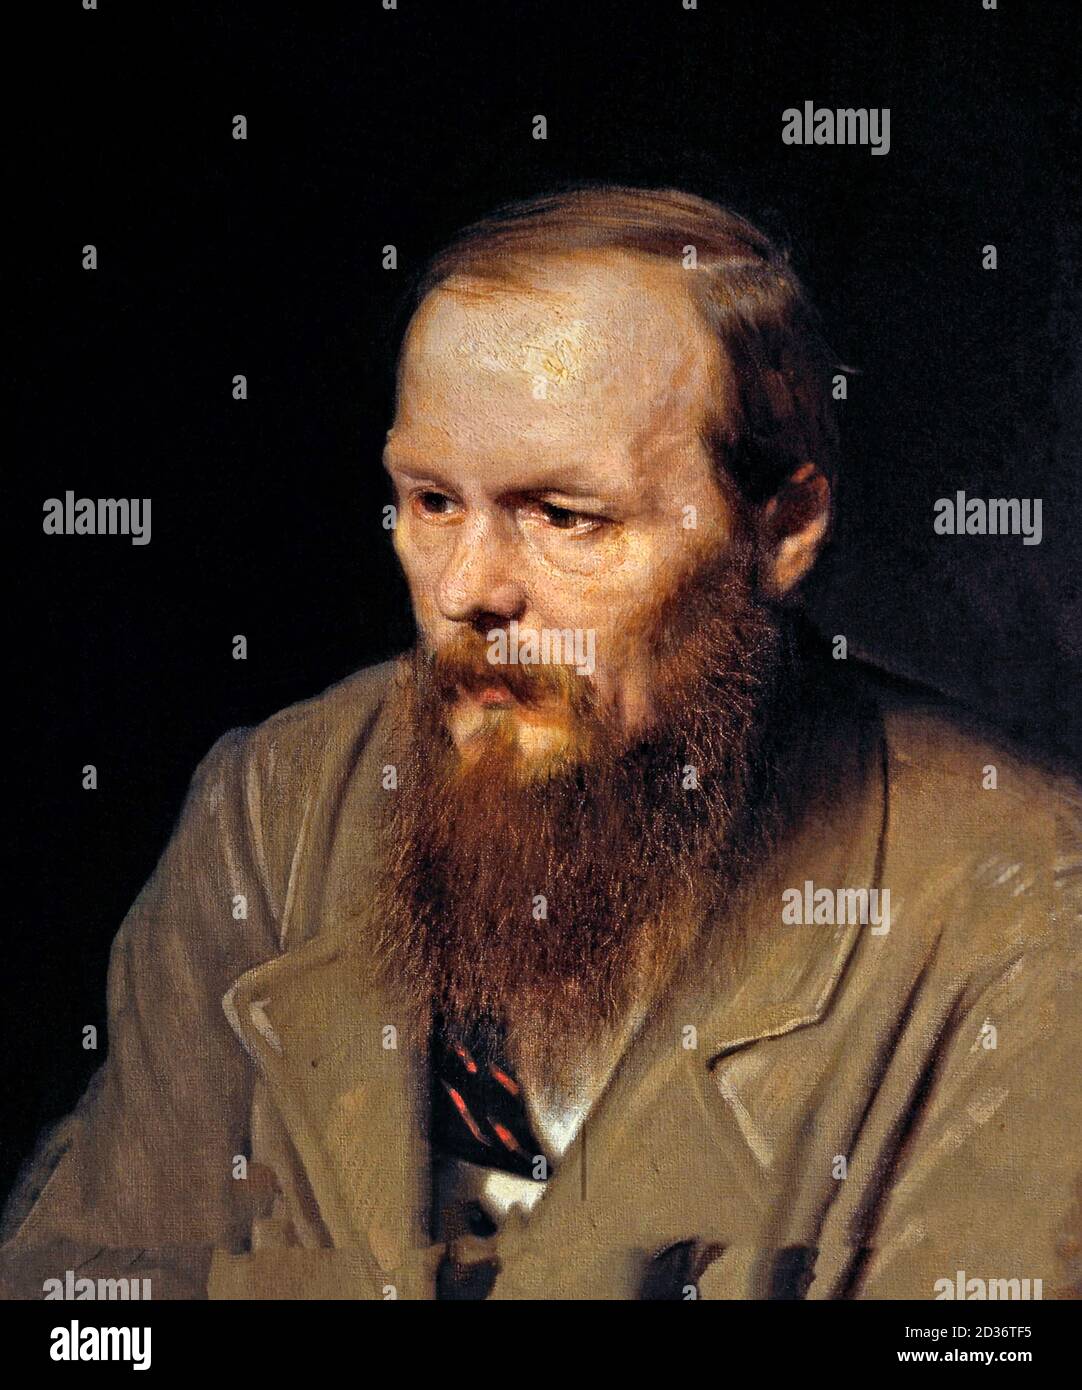 Dostoevsky. Portrait of the Russian writer, Fyodor Mikhailovich Dostoevsky (1821-1881) by Vasily Perov, oil on canvas, 1872. Fedor Dostoyevsky. Stock Photo